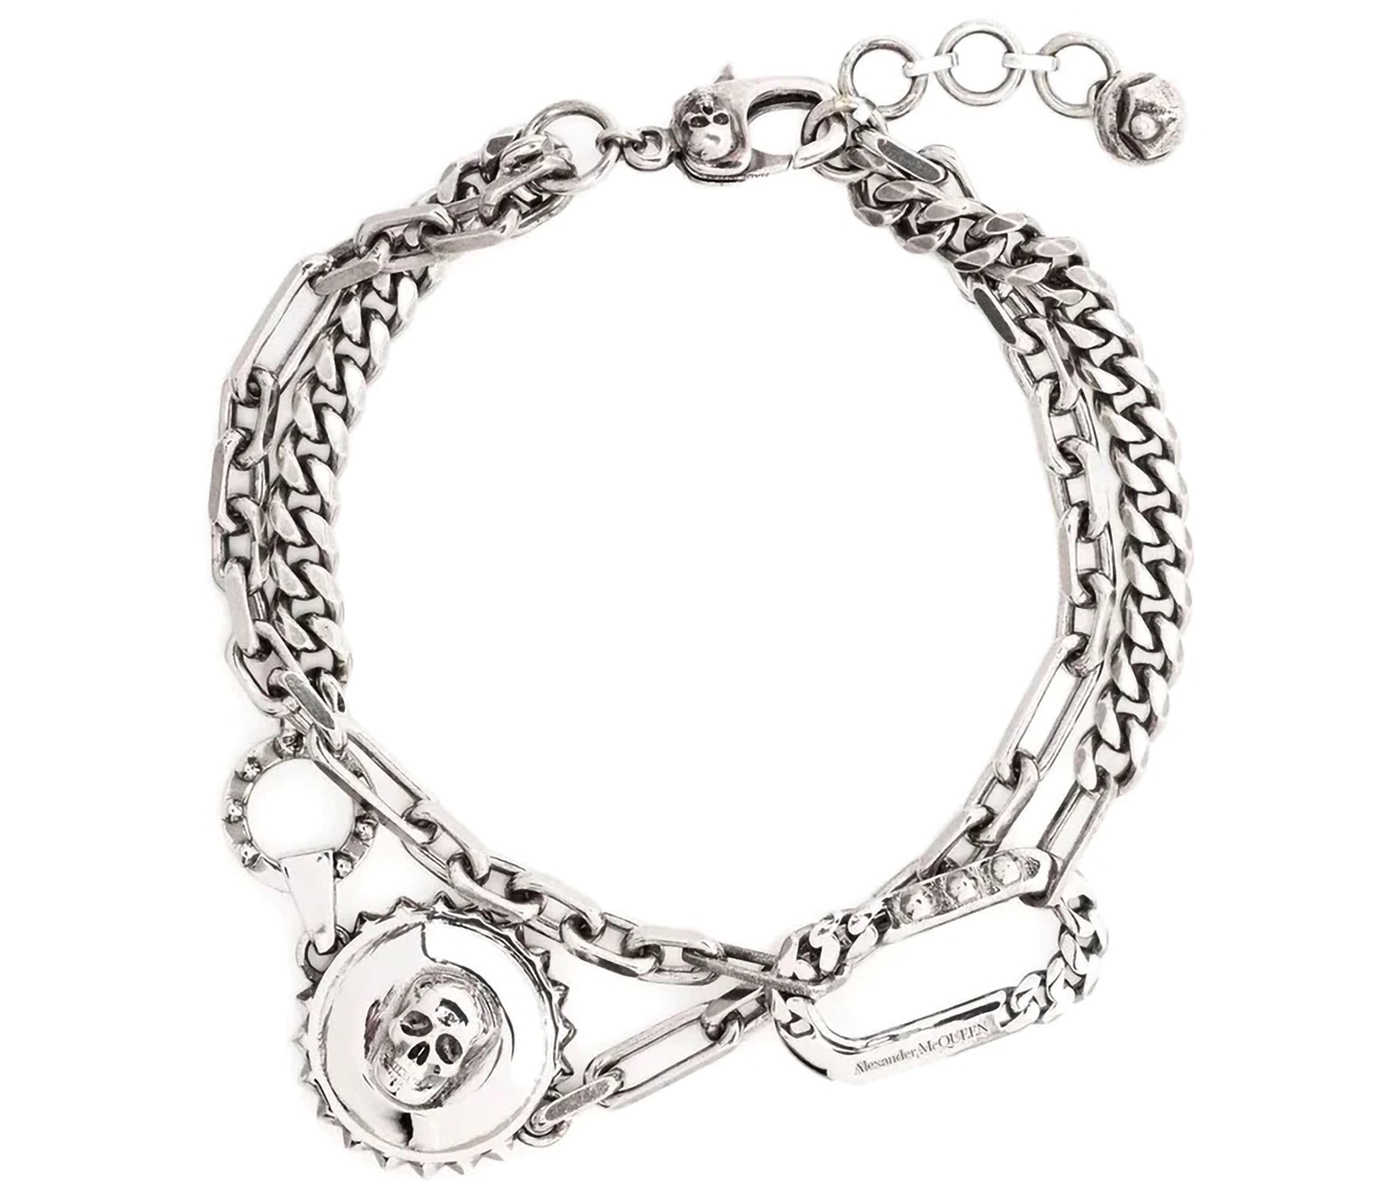 Skull Chain Bracelet in Antique Silver | Alexander McQueen US